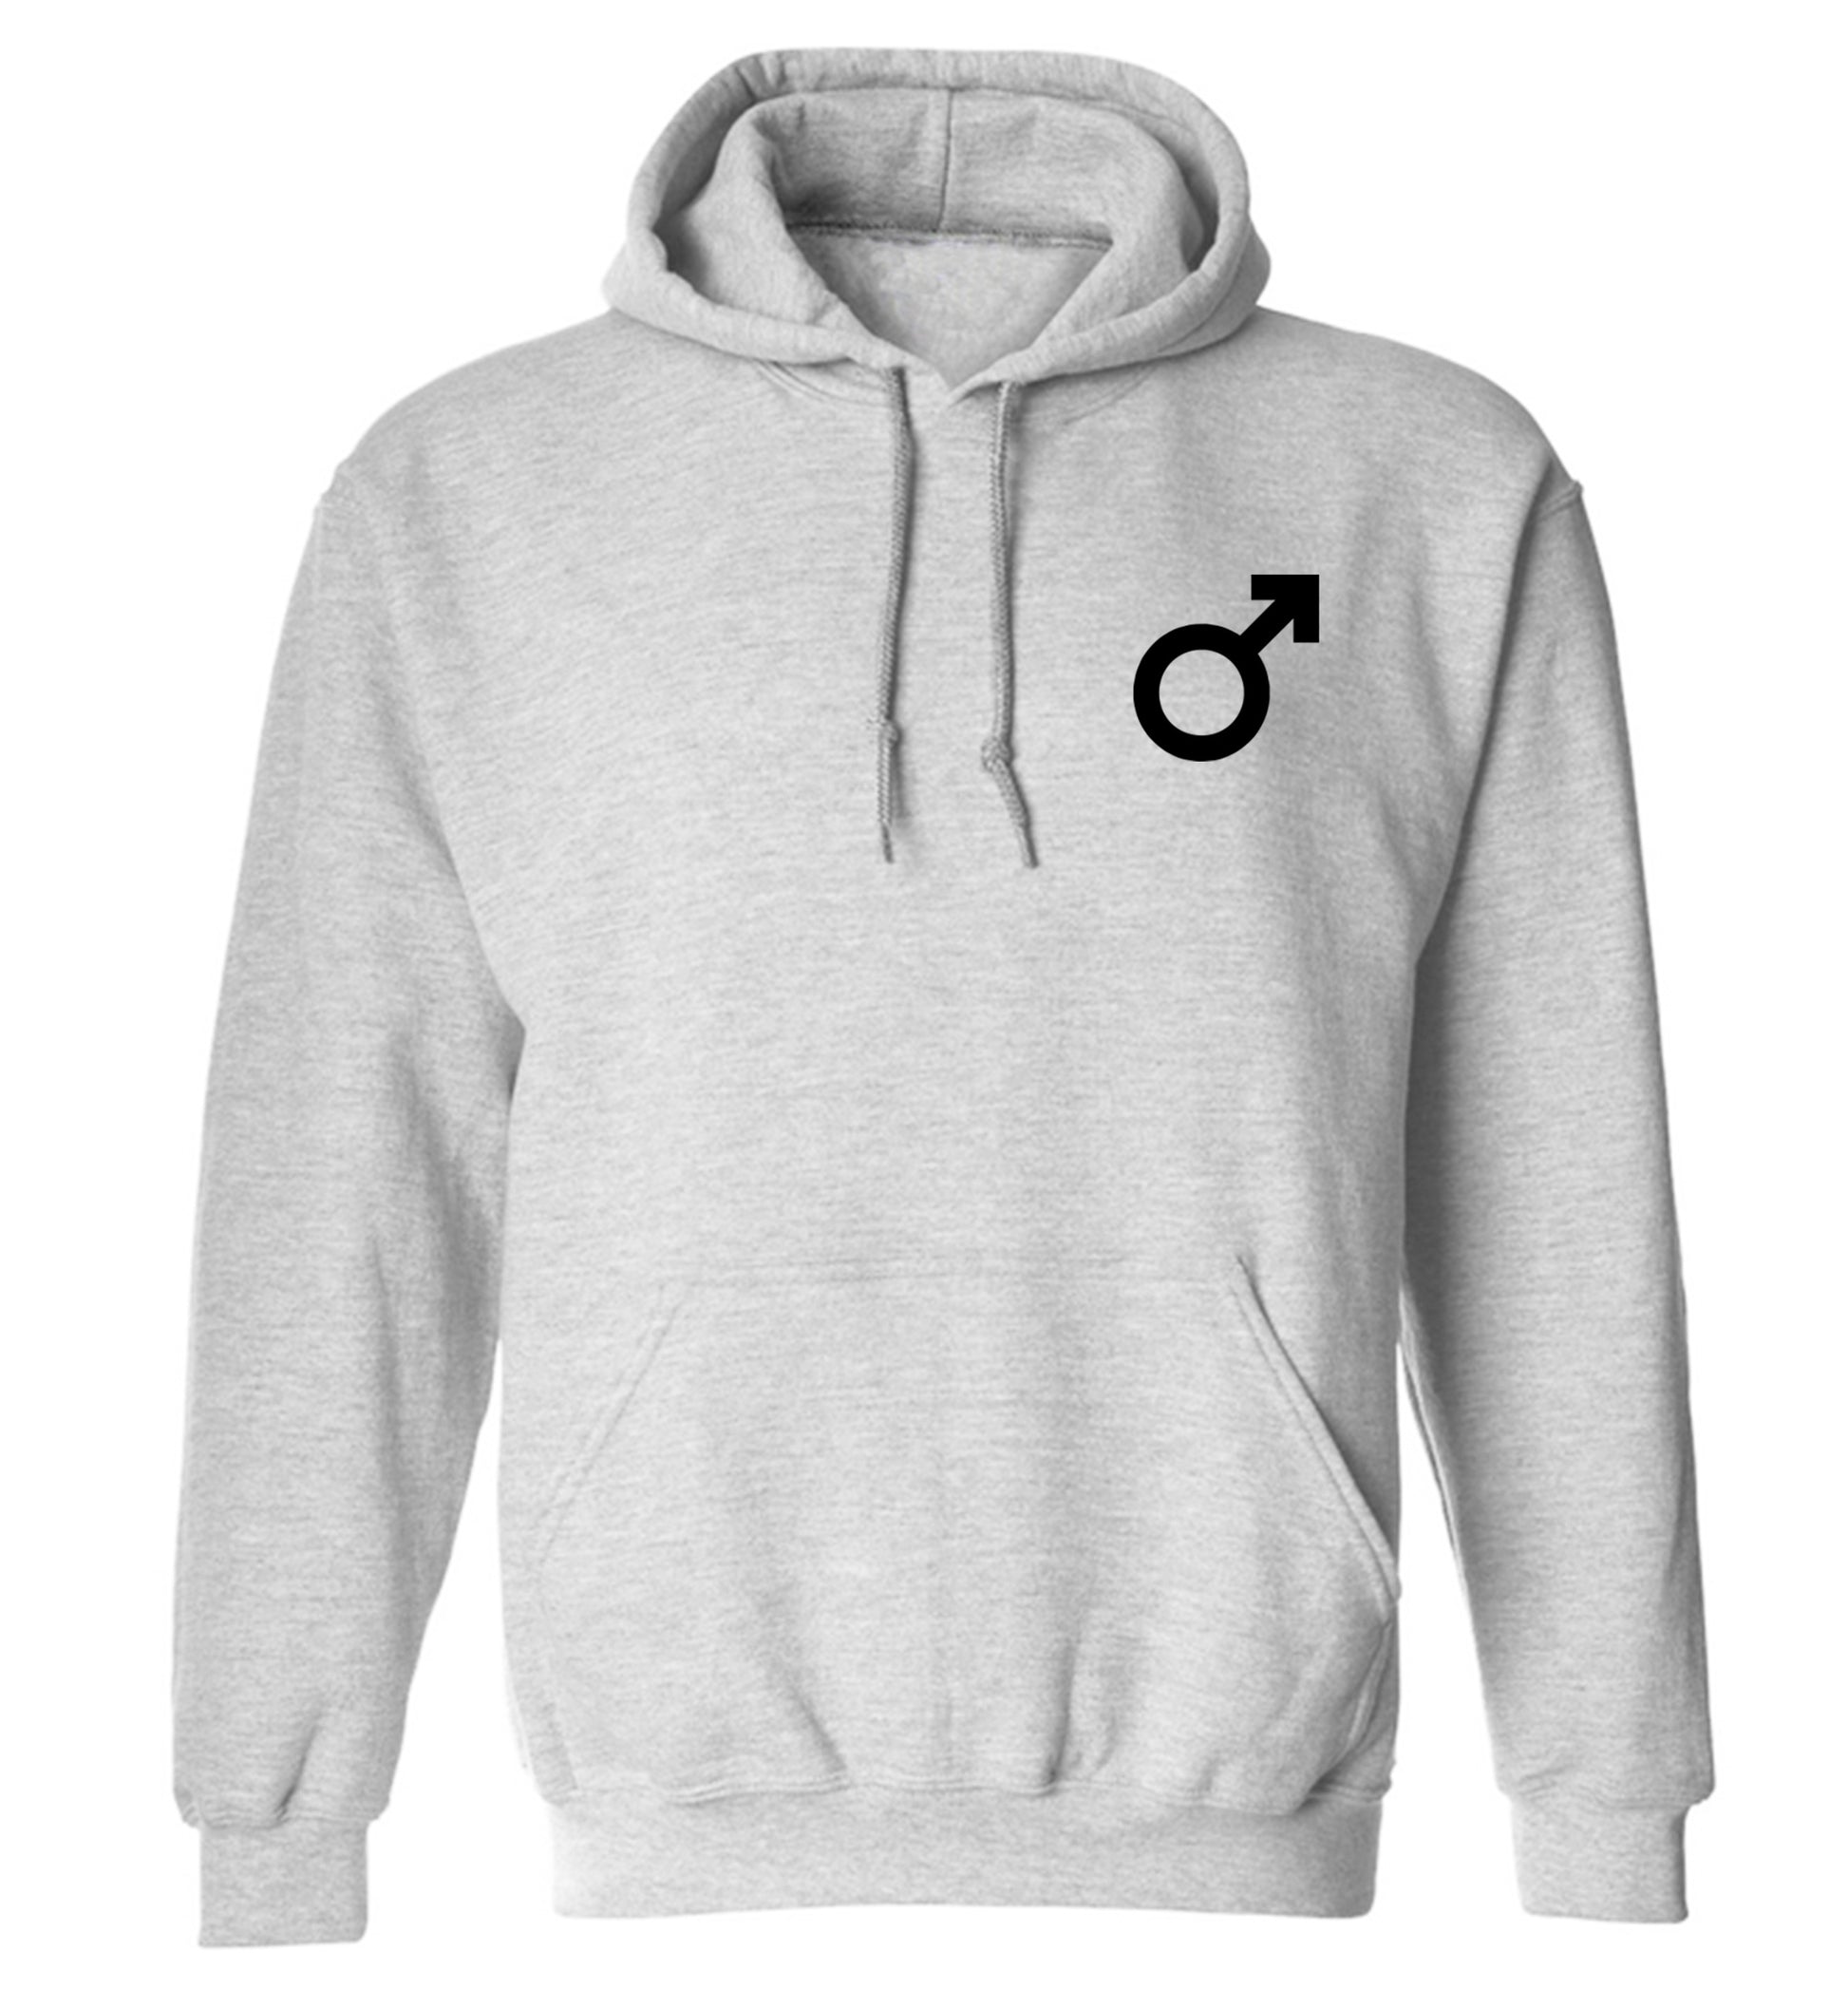 Male symbol pocket adults unisex grey hoodie 2XL